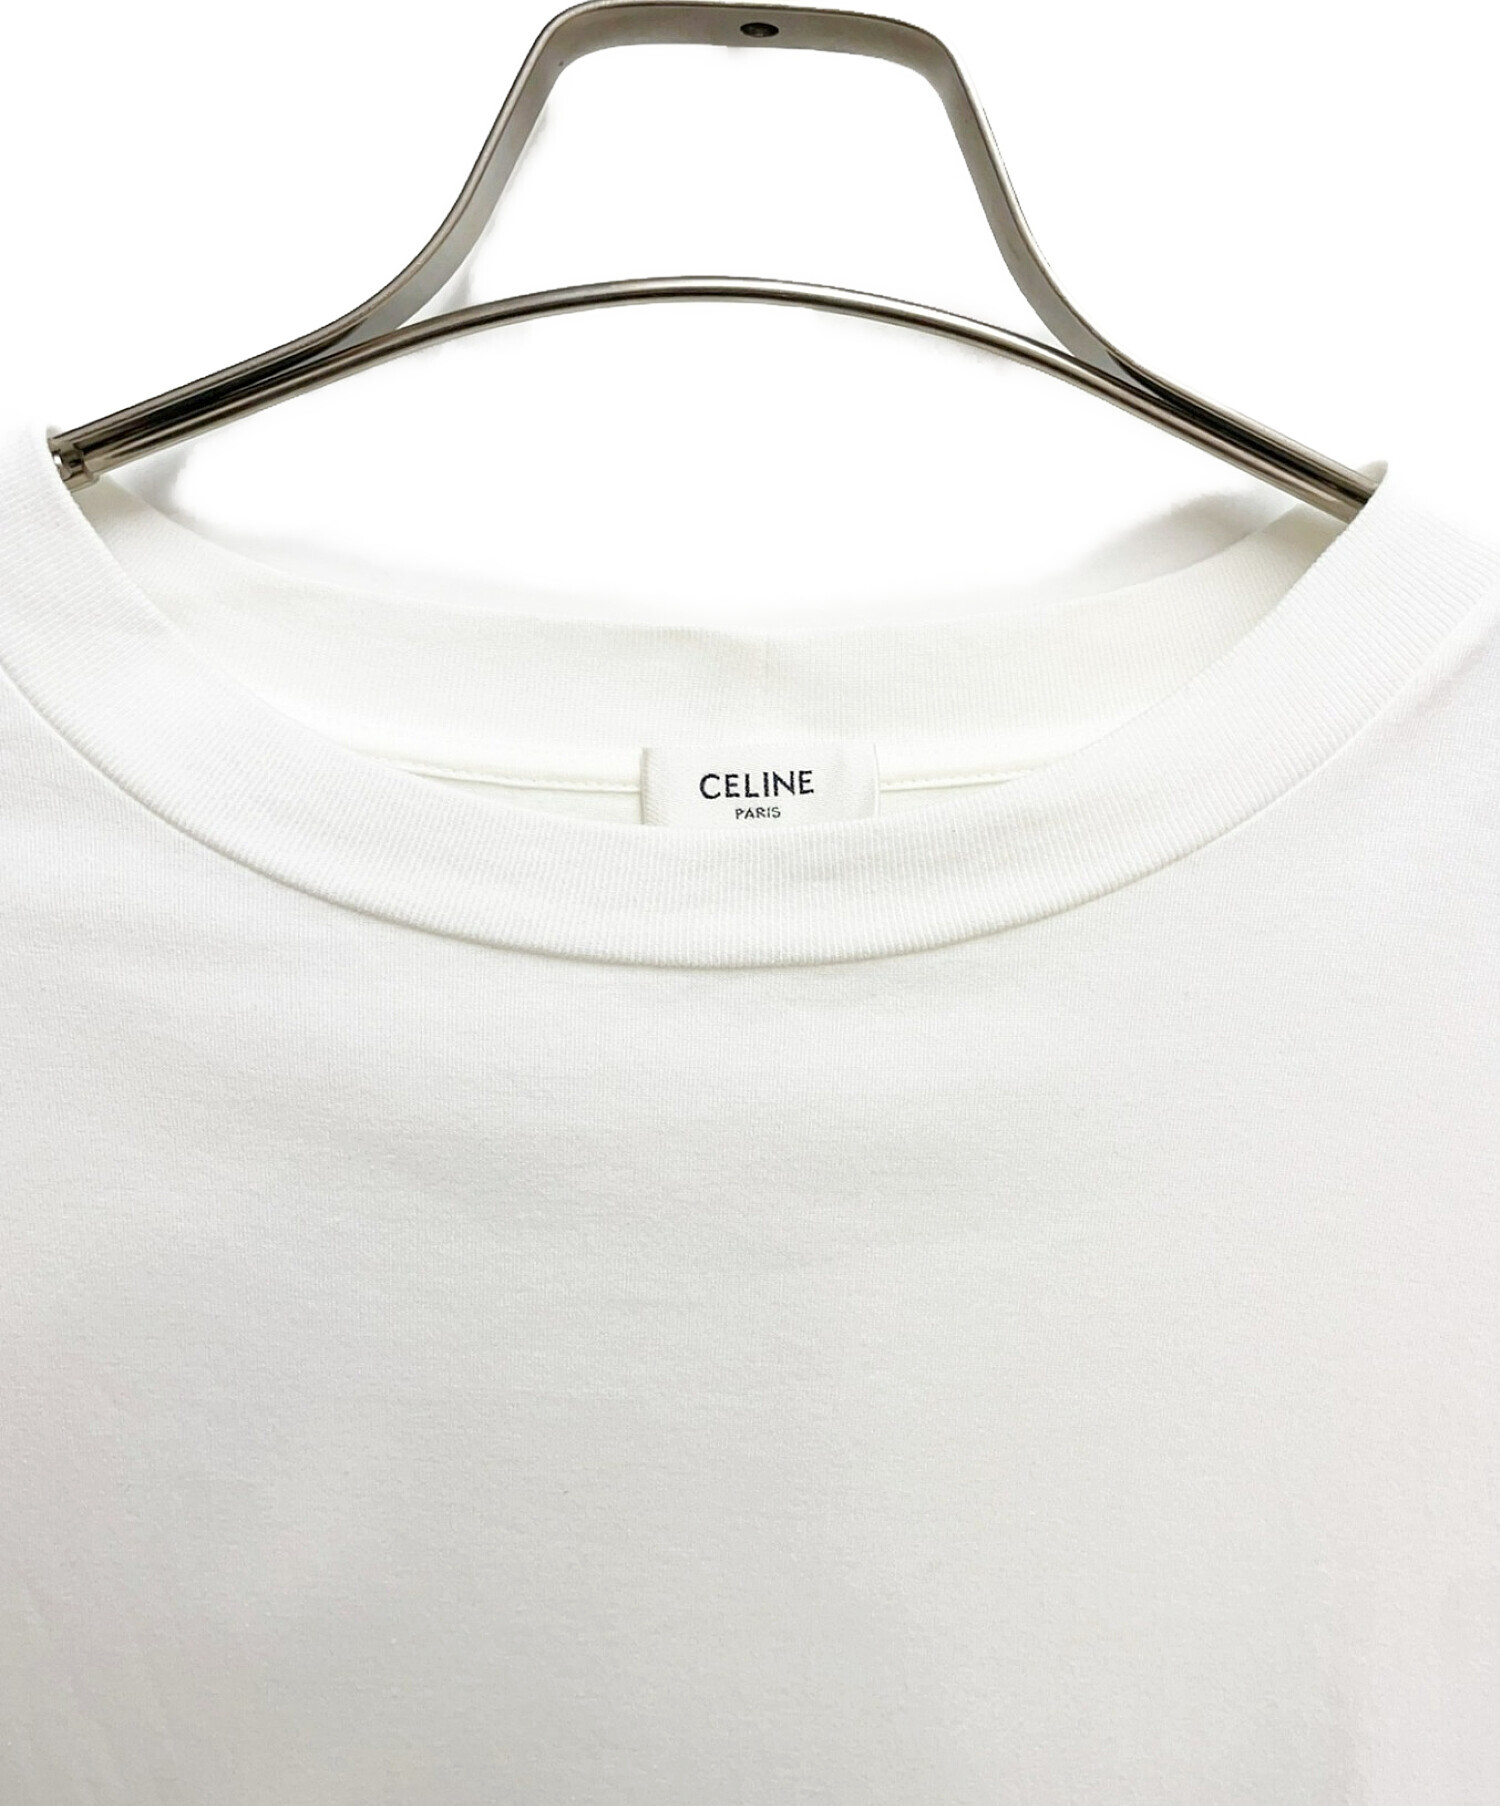 CELINE (セリーヌ) DYSFUNCTIONAL BAUHAUSTシャツ ホワイト サイズ:XS